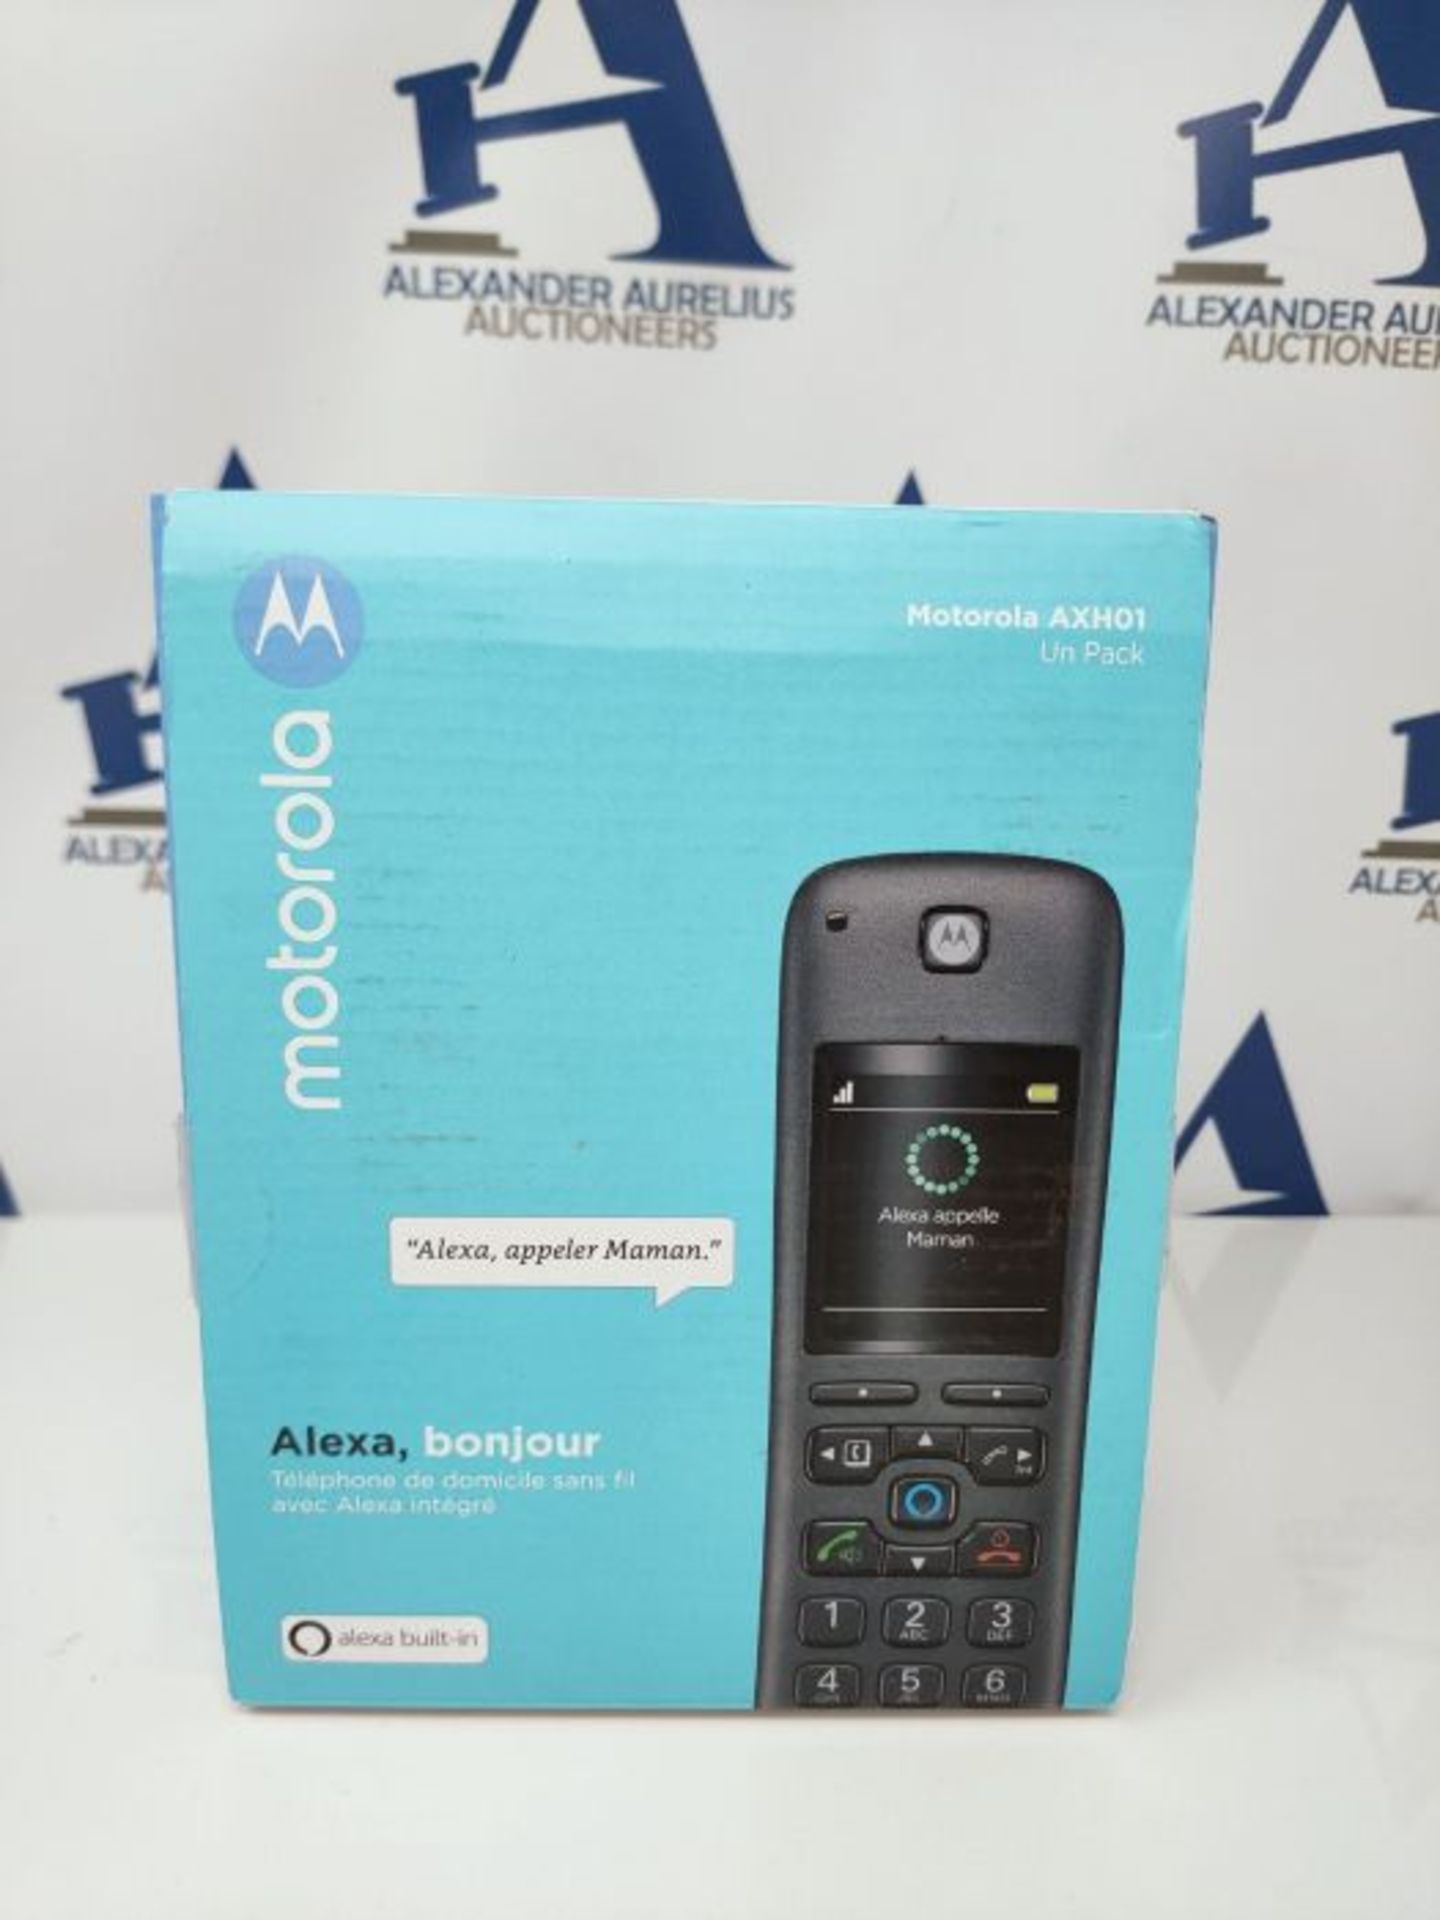 RRP £78.00 Motorola AXH01 - TÃ©lÃ©phone d'intÃ©rieur sans Fil avec Alexa - Noir - Image 2 of 3